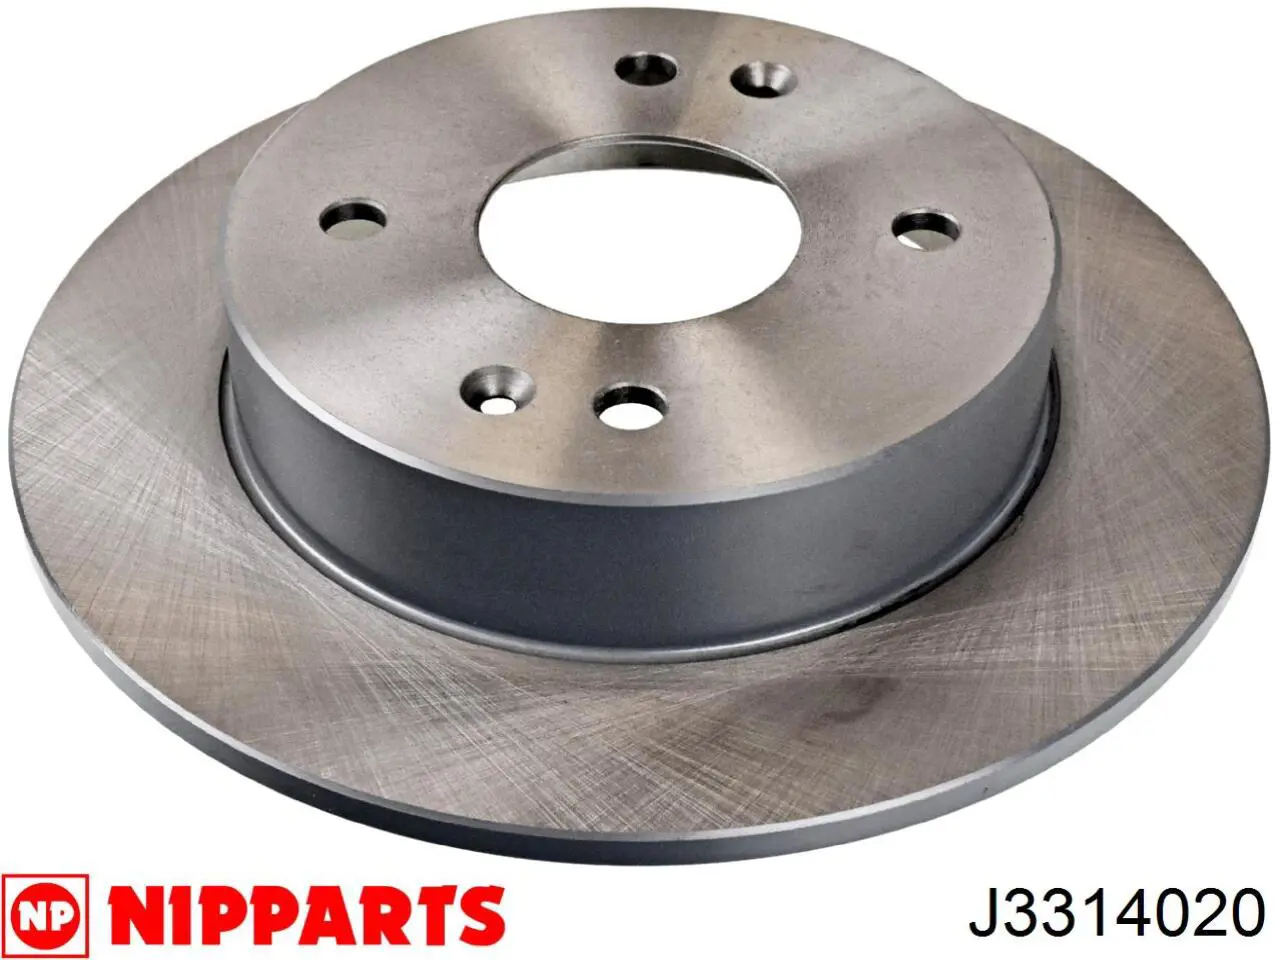 J3314020 Nipparts disco de freno trasero